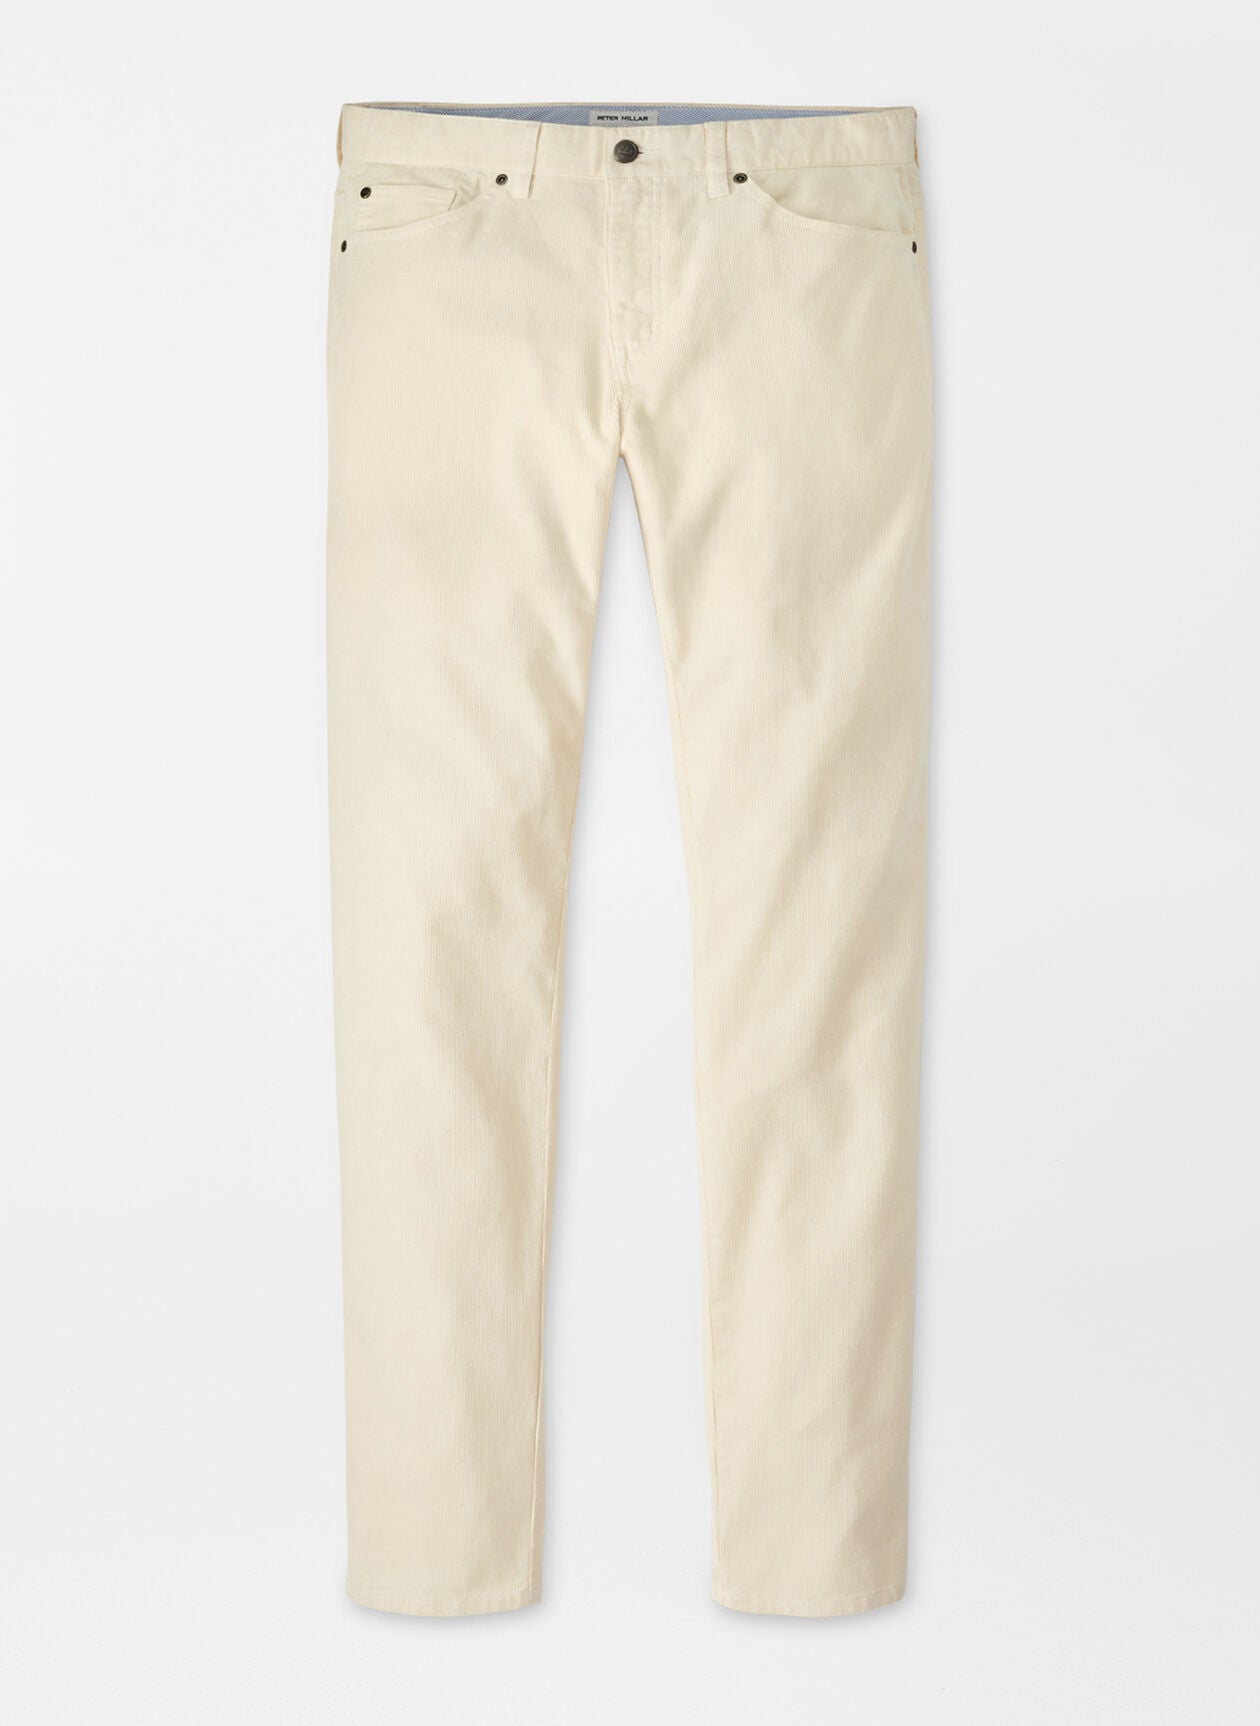 Superior Soft Corduroy Five Pocket Pant